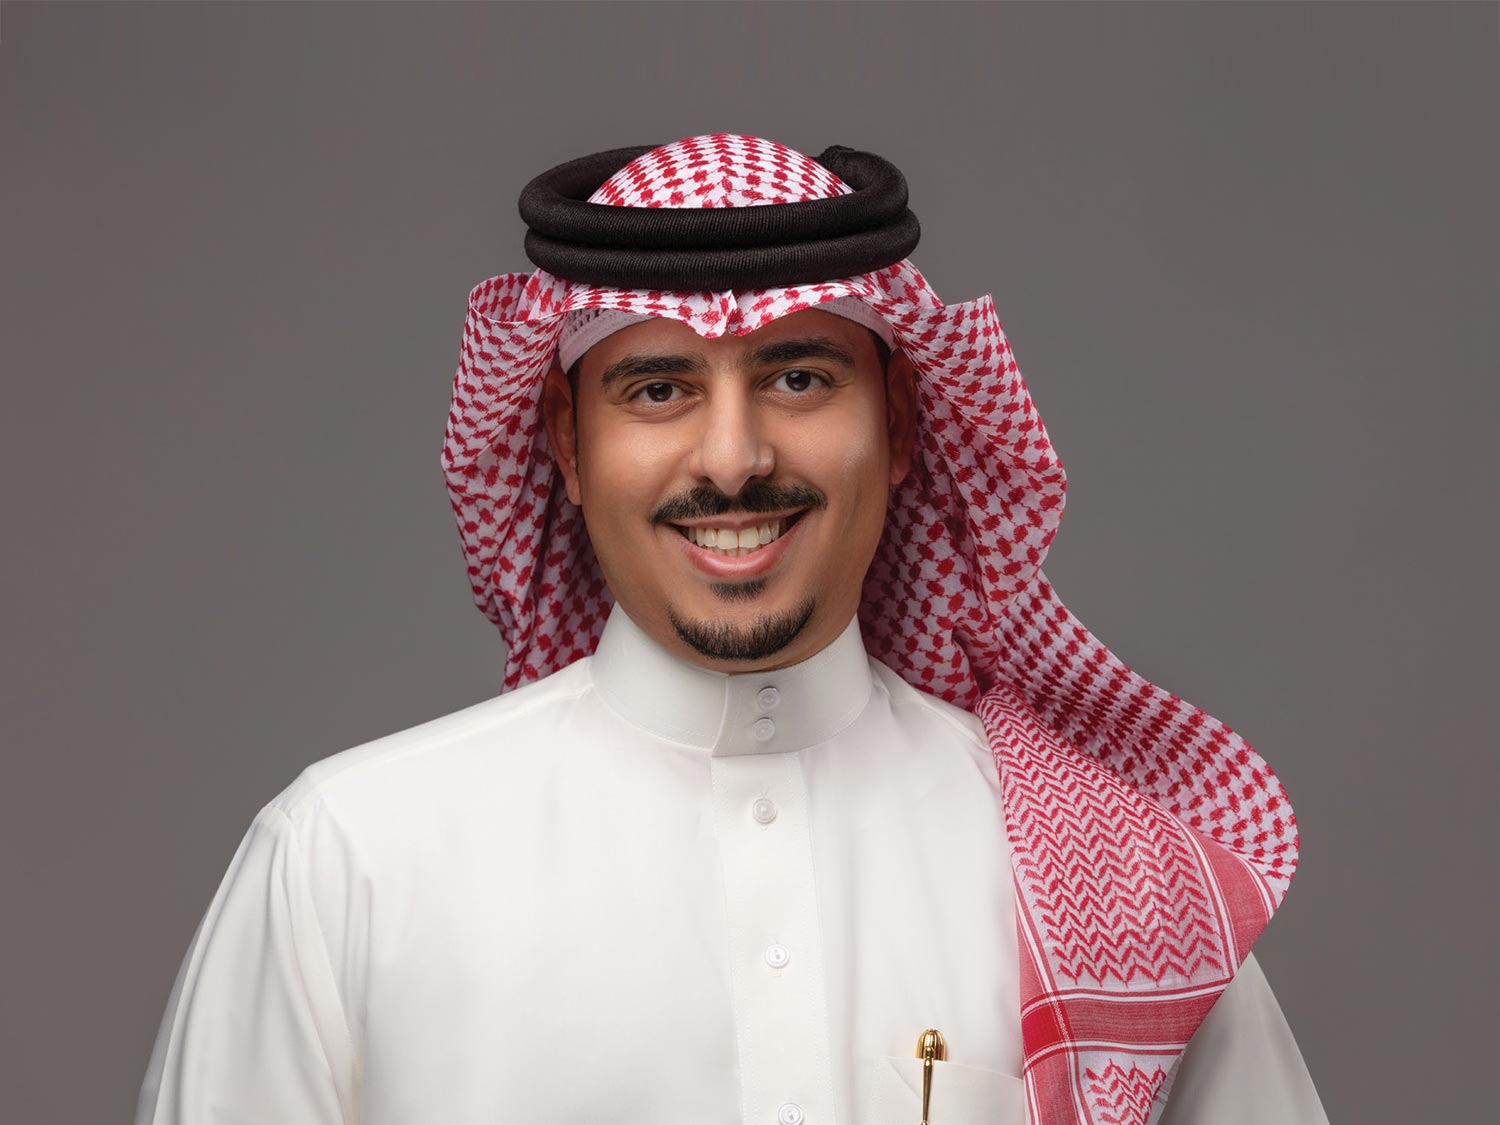 The General Director of Vatel Bahrain